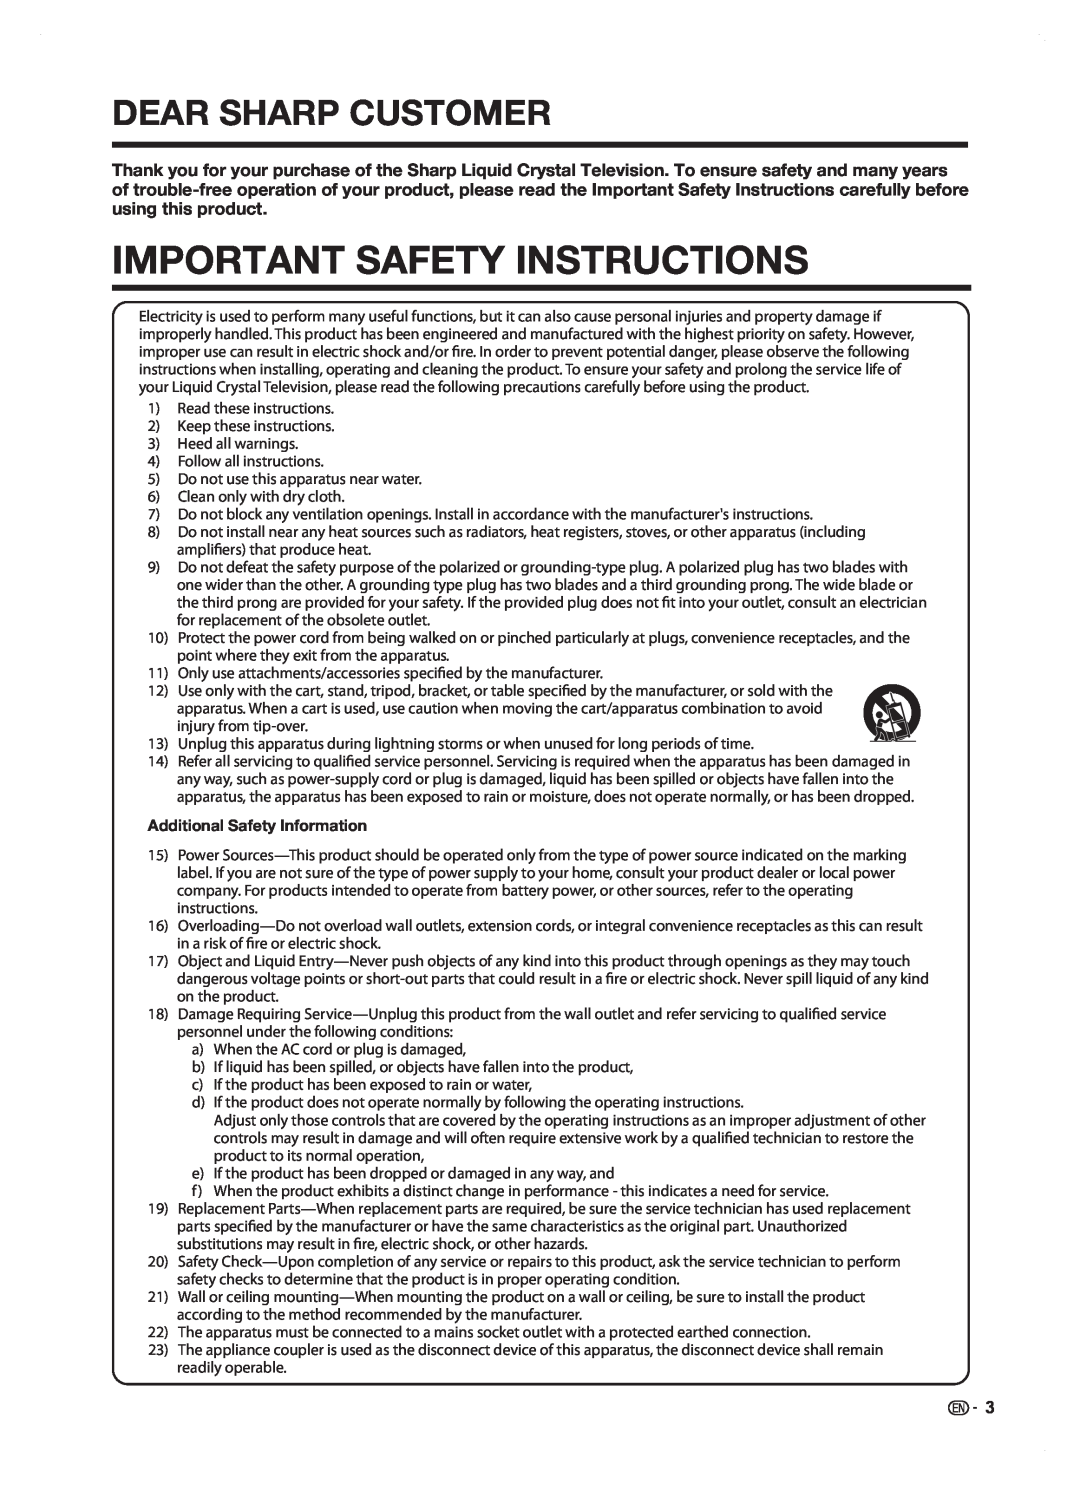 Sharp LC42SB45U operation manual Important Safety Instructions, Dear Sharp Customer, Additional Safety Information 